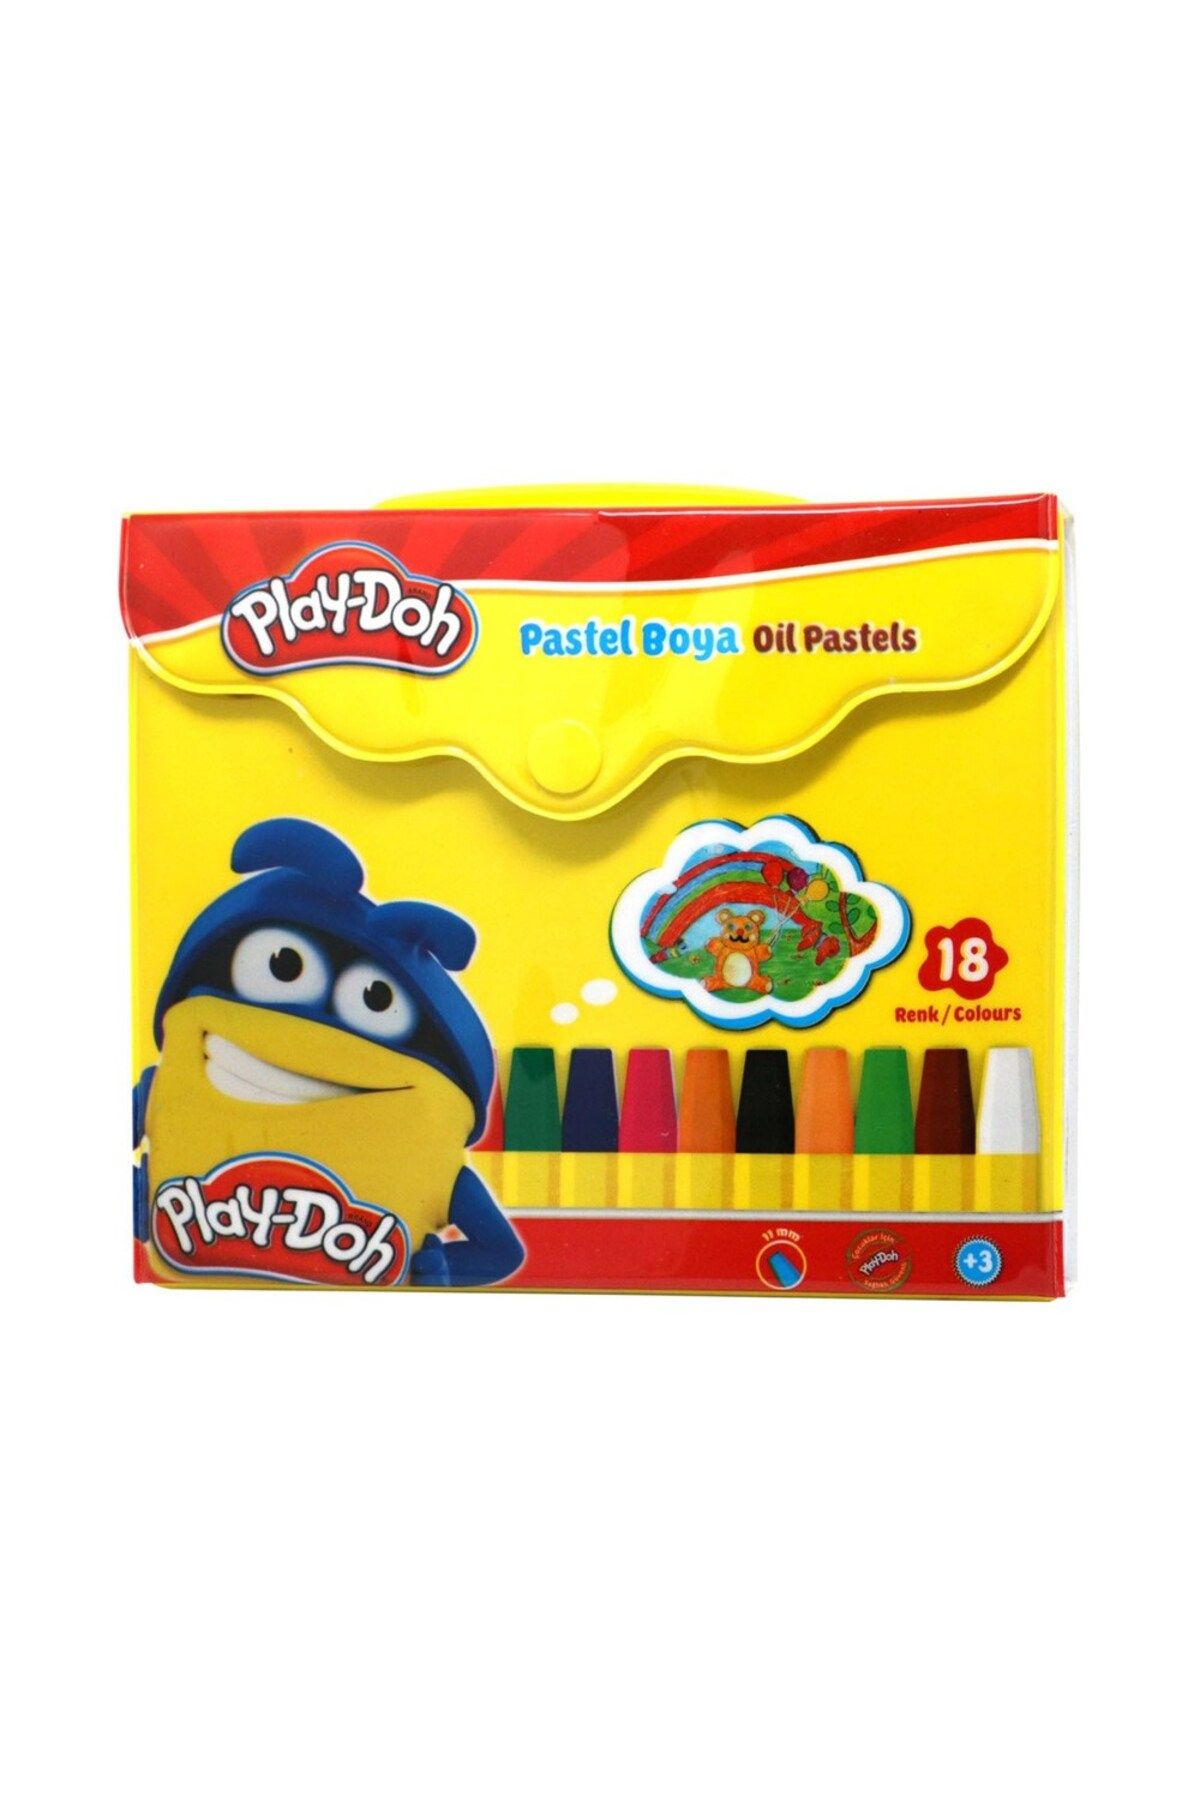 Play Doh Play-doh Pastel Boya Çantalı 18 Renk